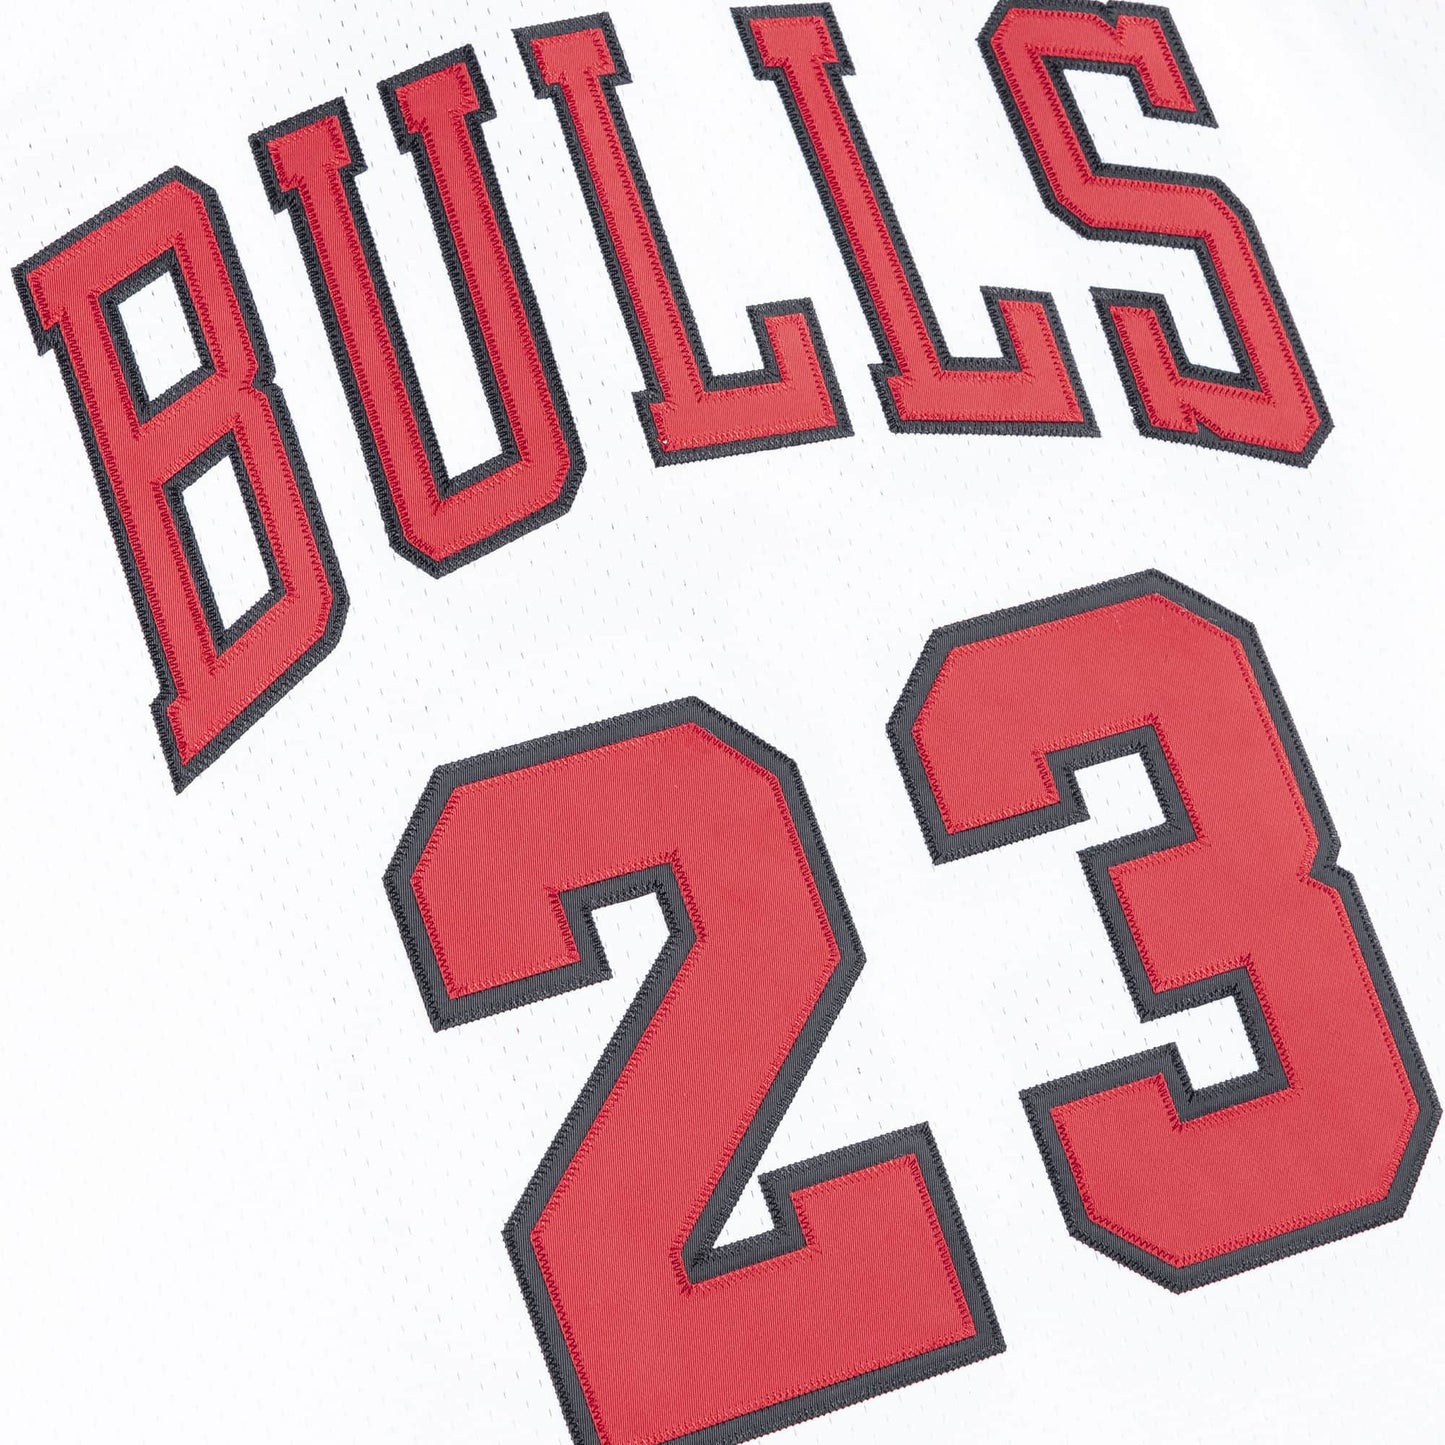 NBA Authentic Jersey Chicago Bulls 1995-96 Michael Jordan